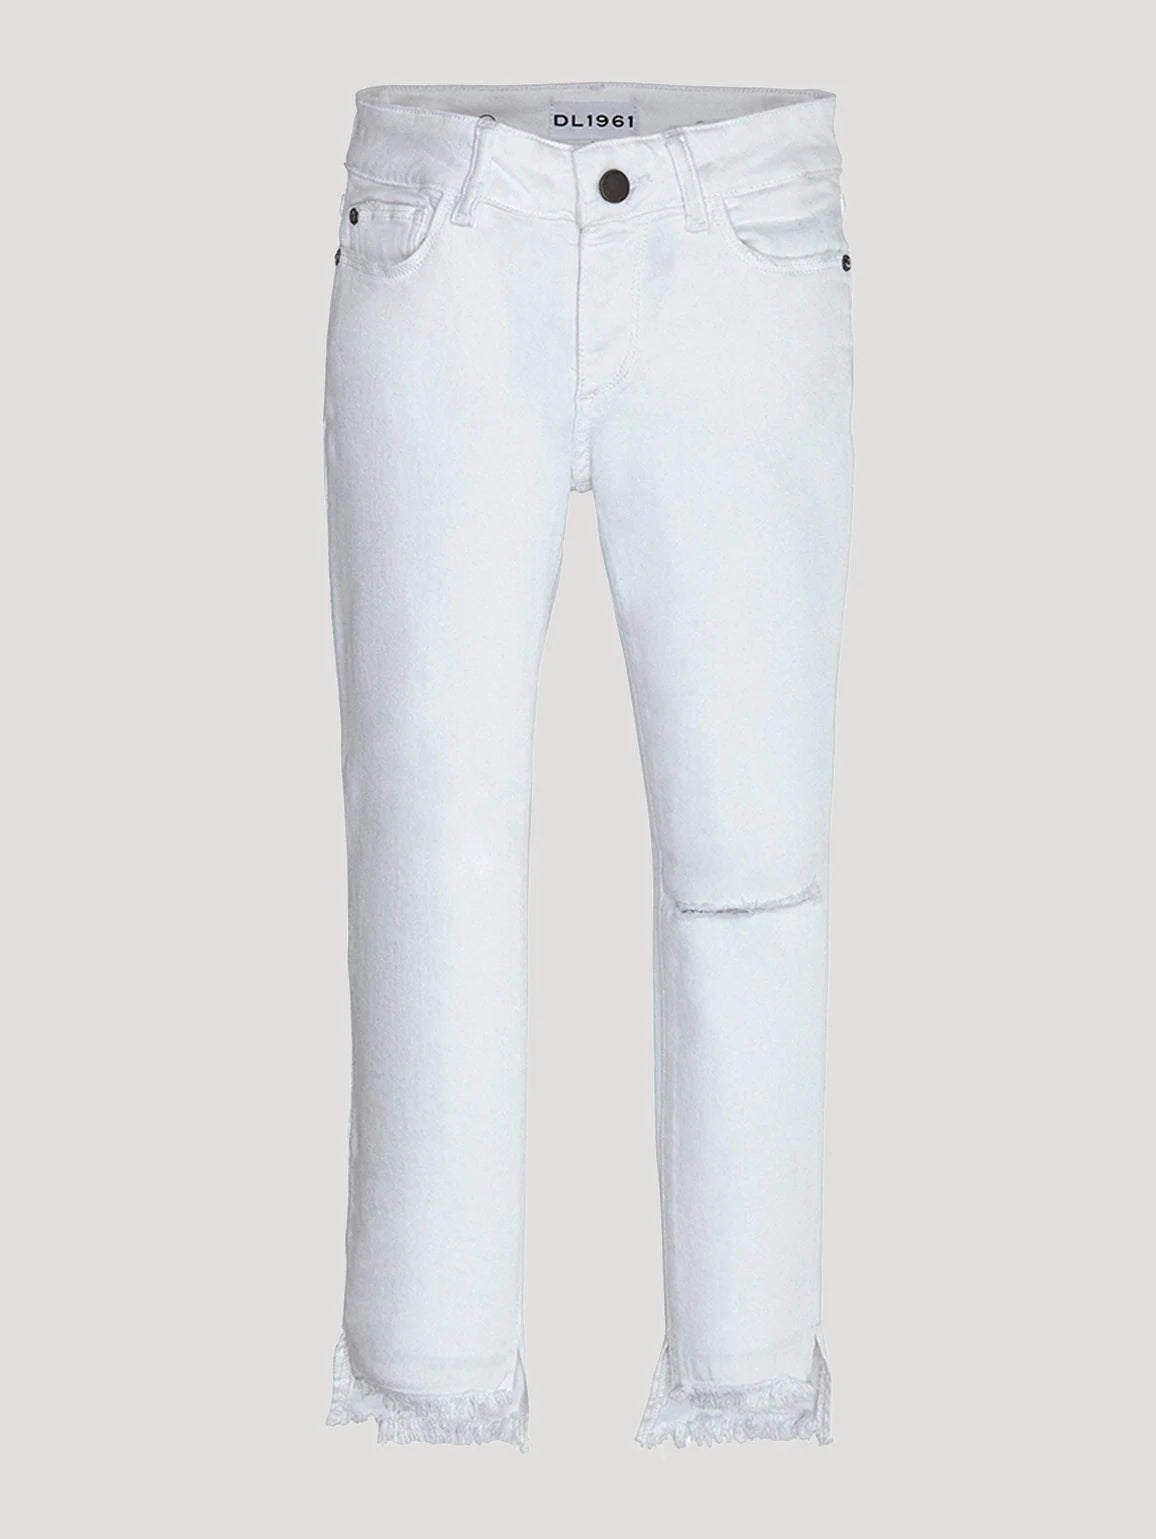 DL1961 Skinny Jeans